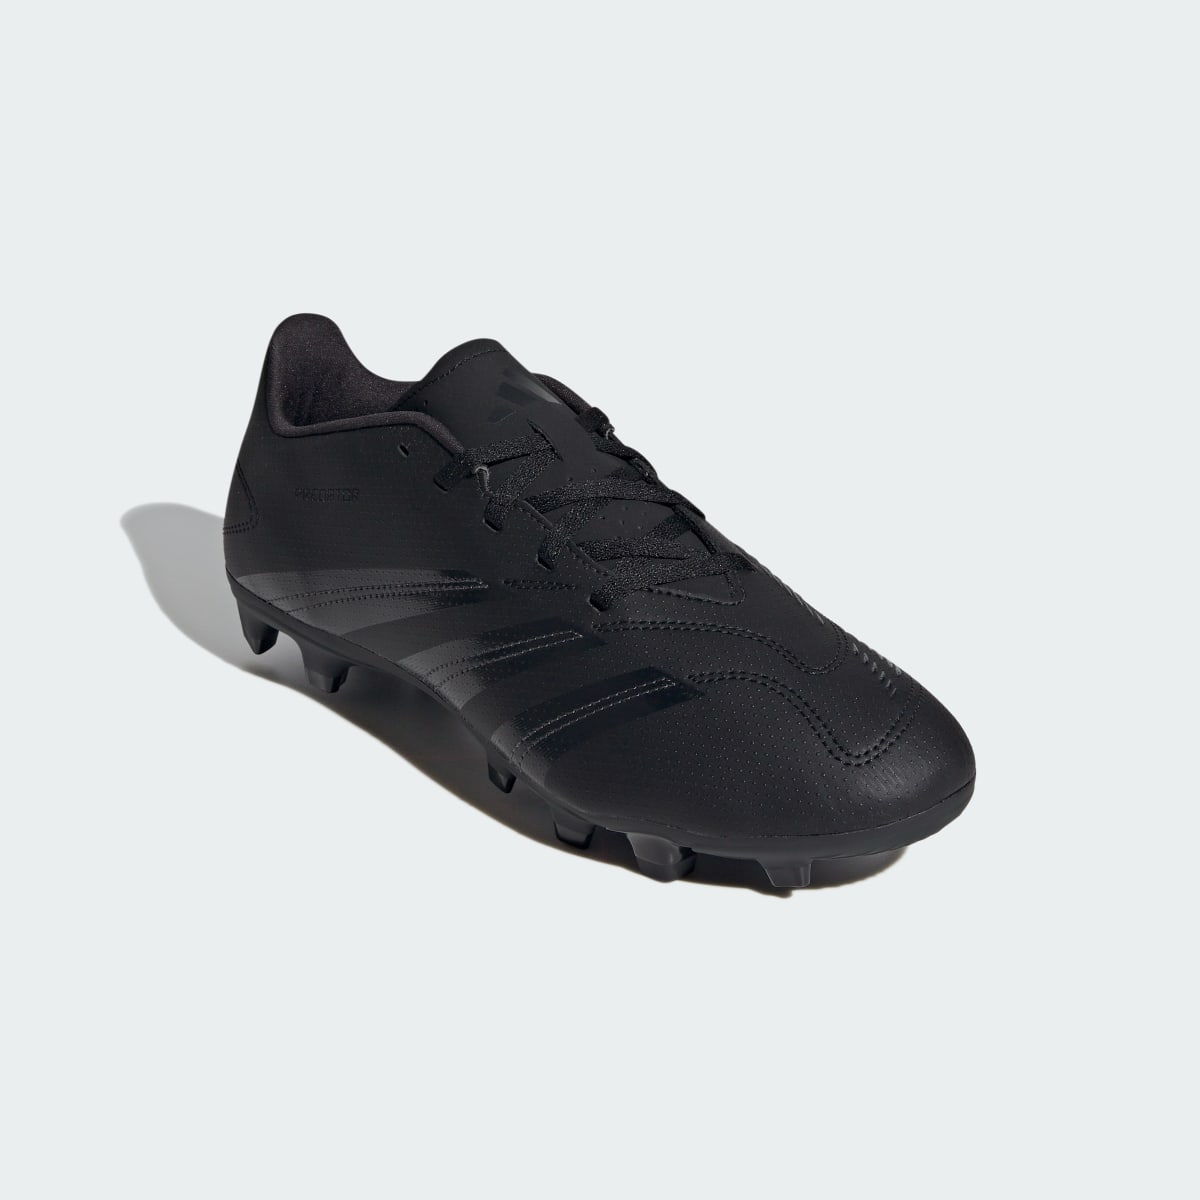 Adidas Predator Club Flexible Ground Football Boots. 5